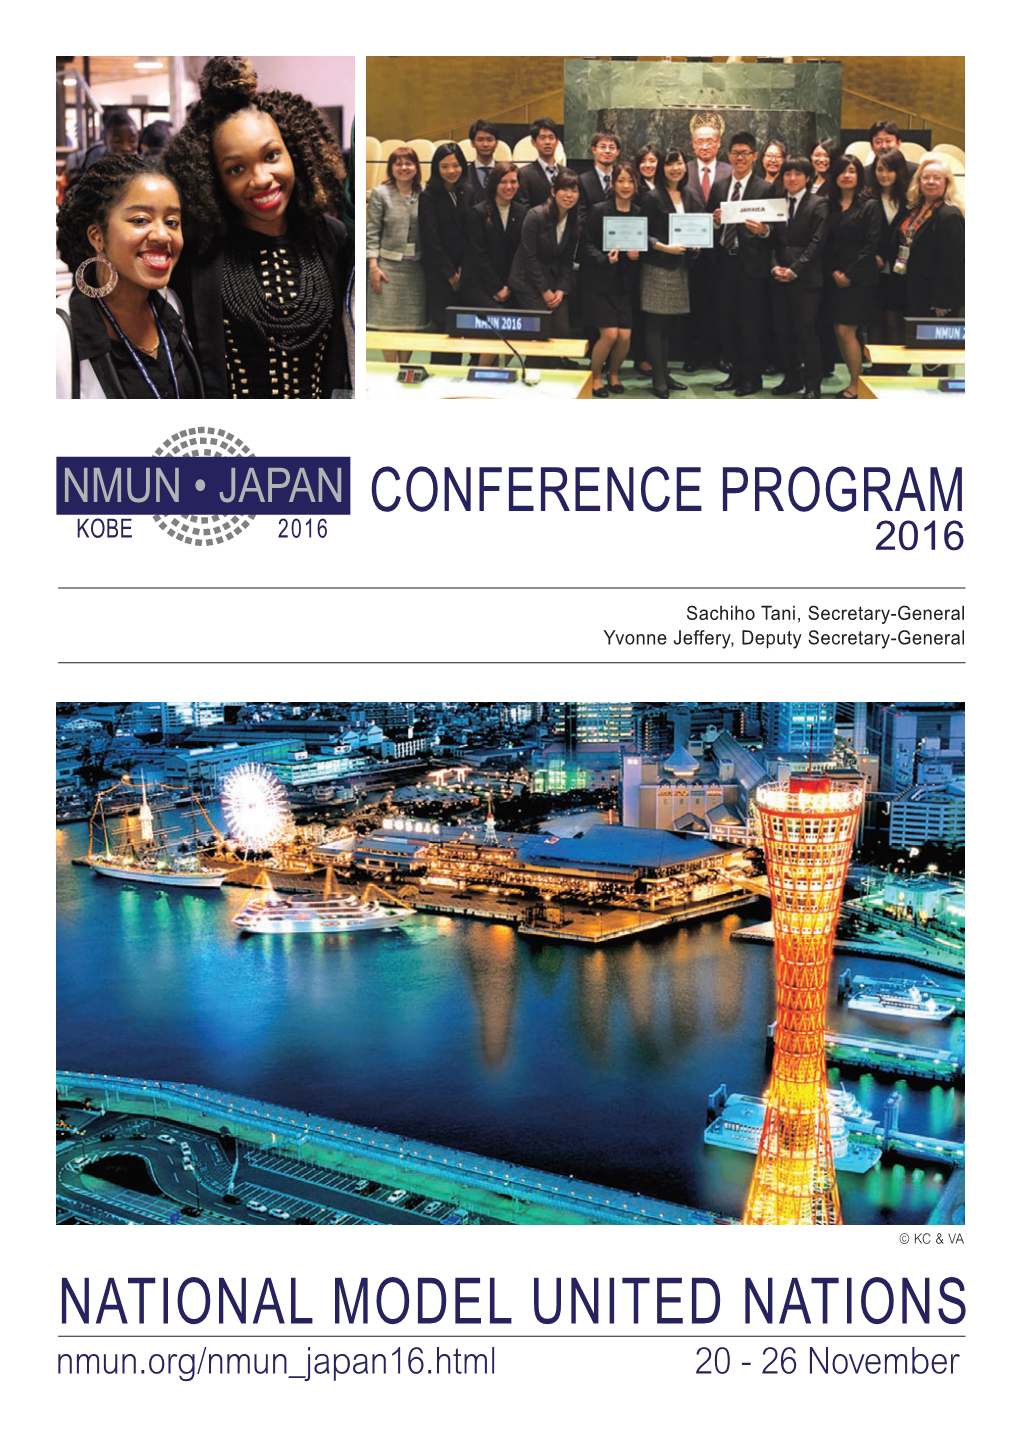 Conference Program Kobe 2016 2016